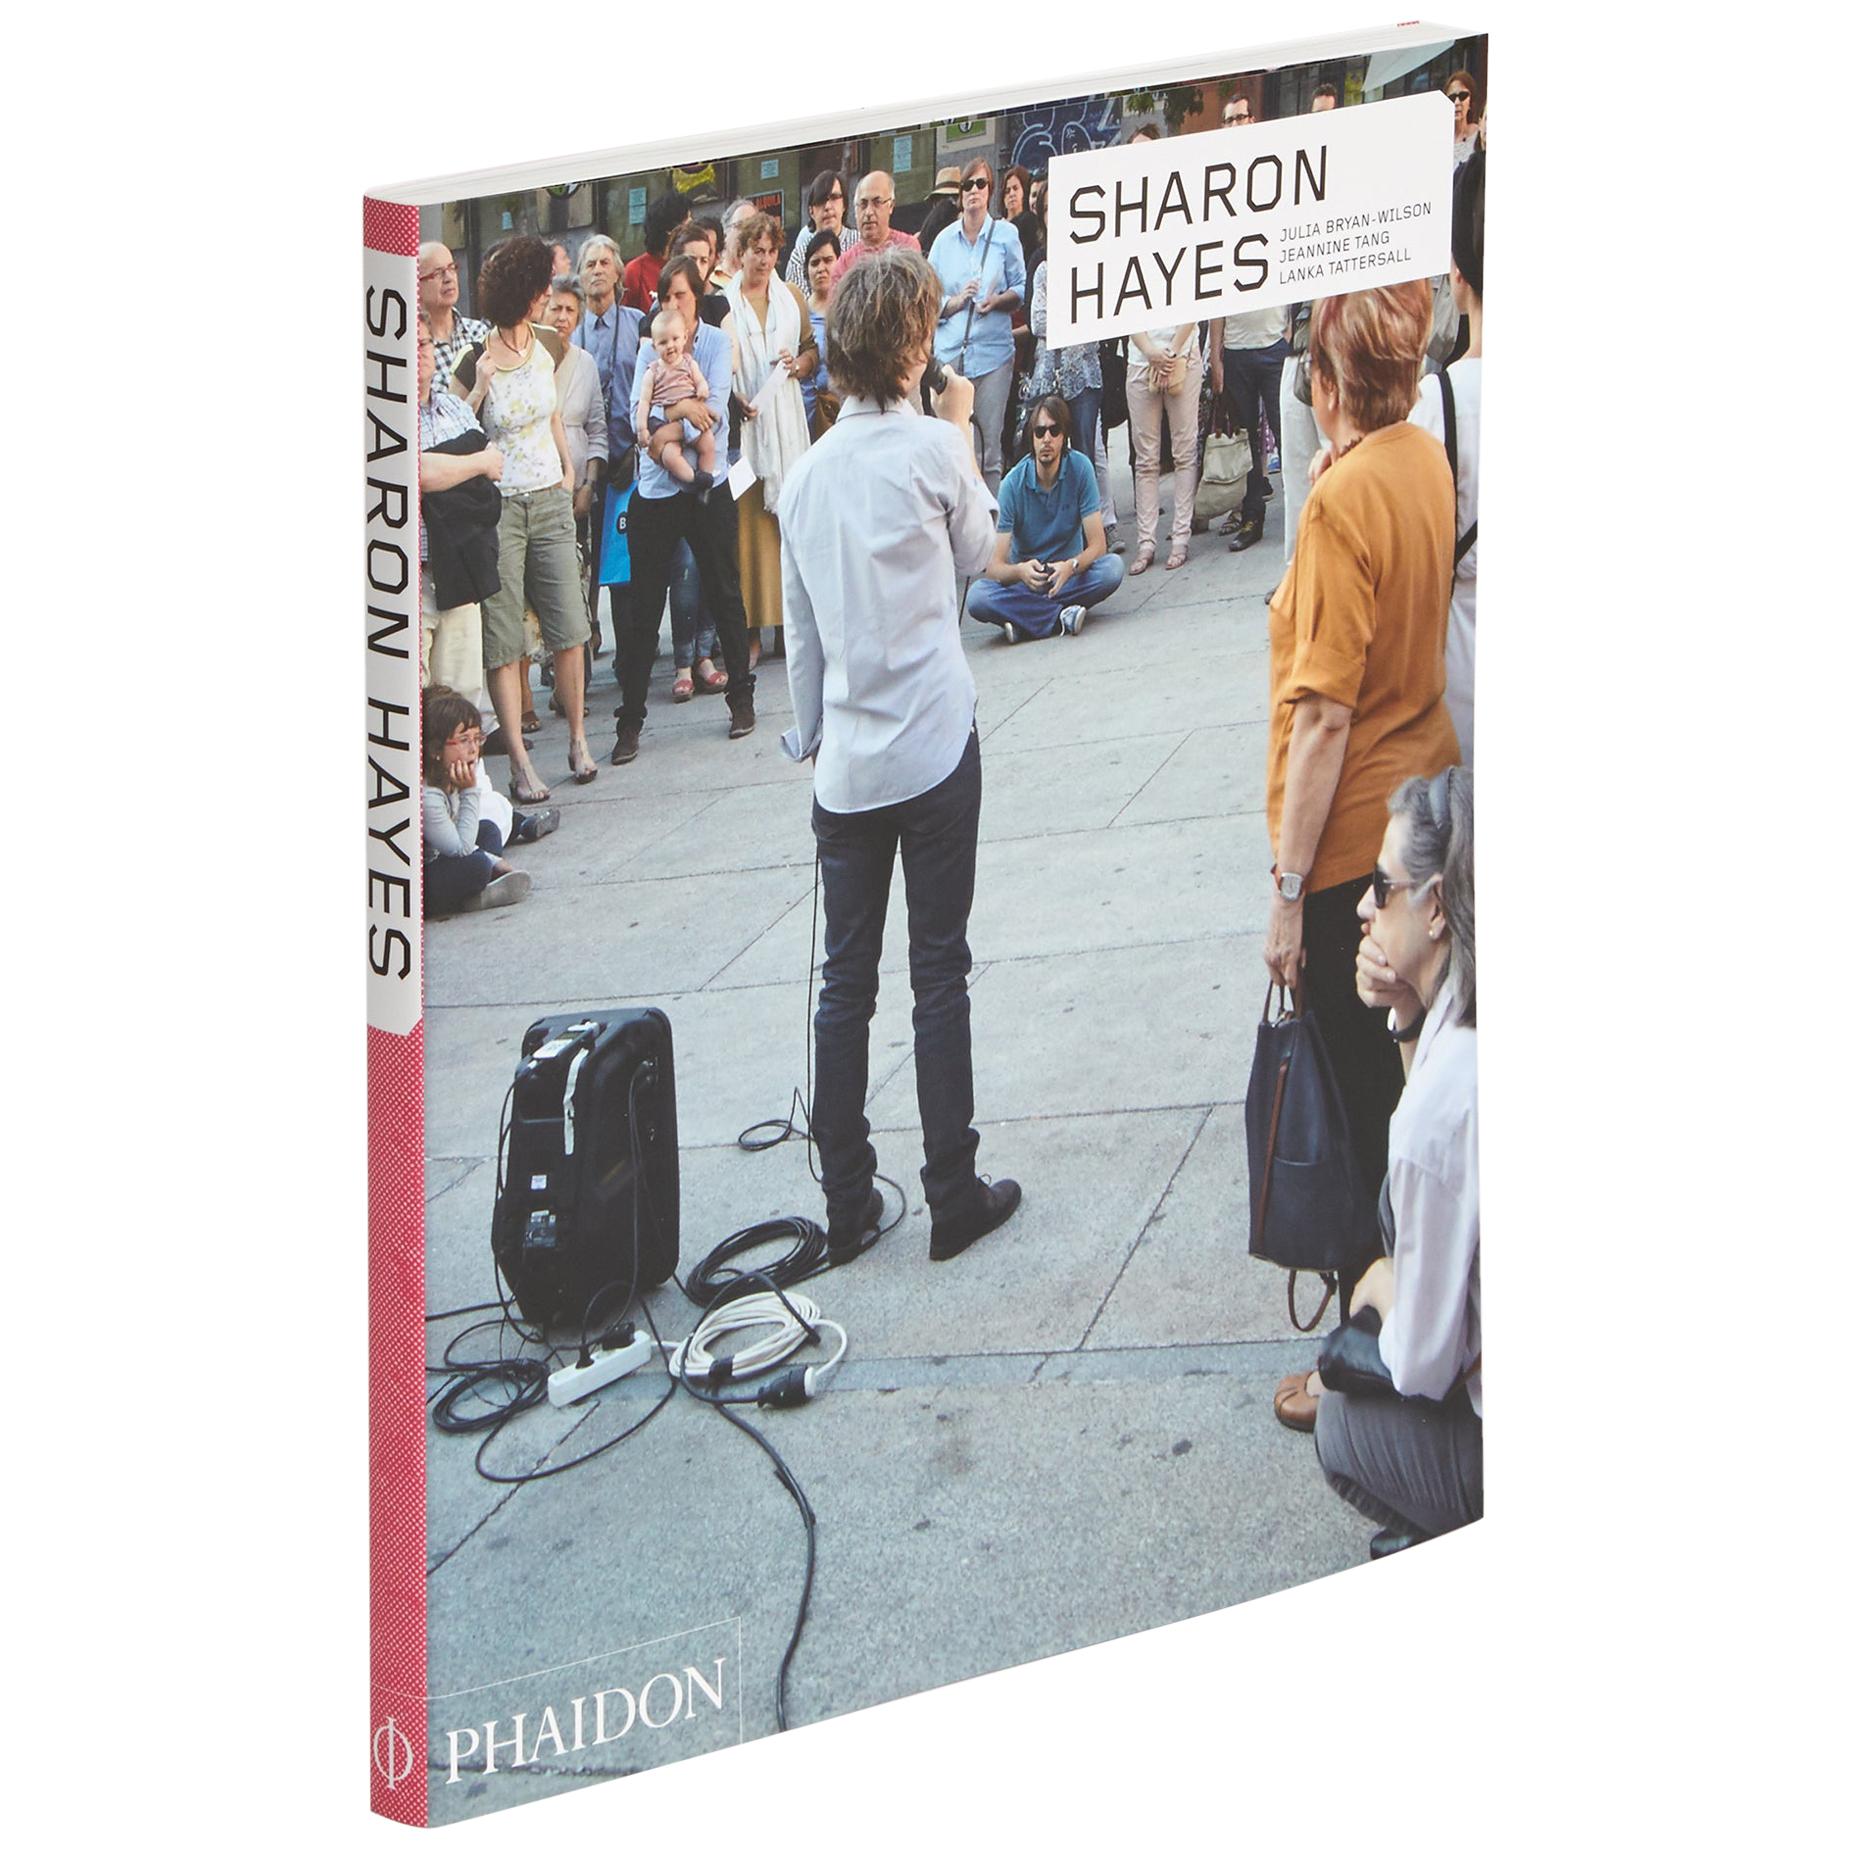 Sharon Hayes 'Phaidon Contemporary Artists Series'